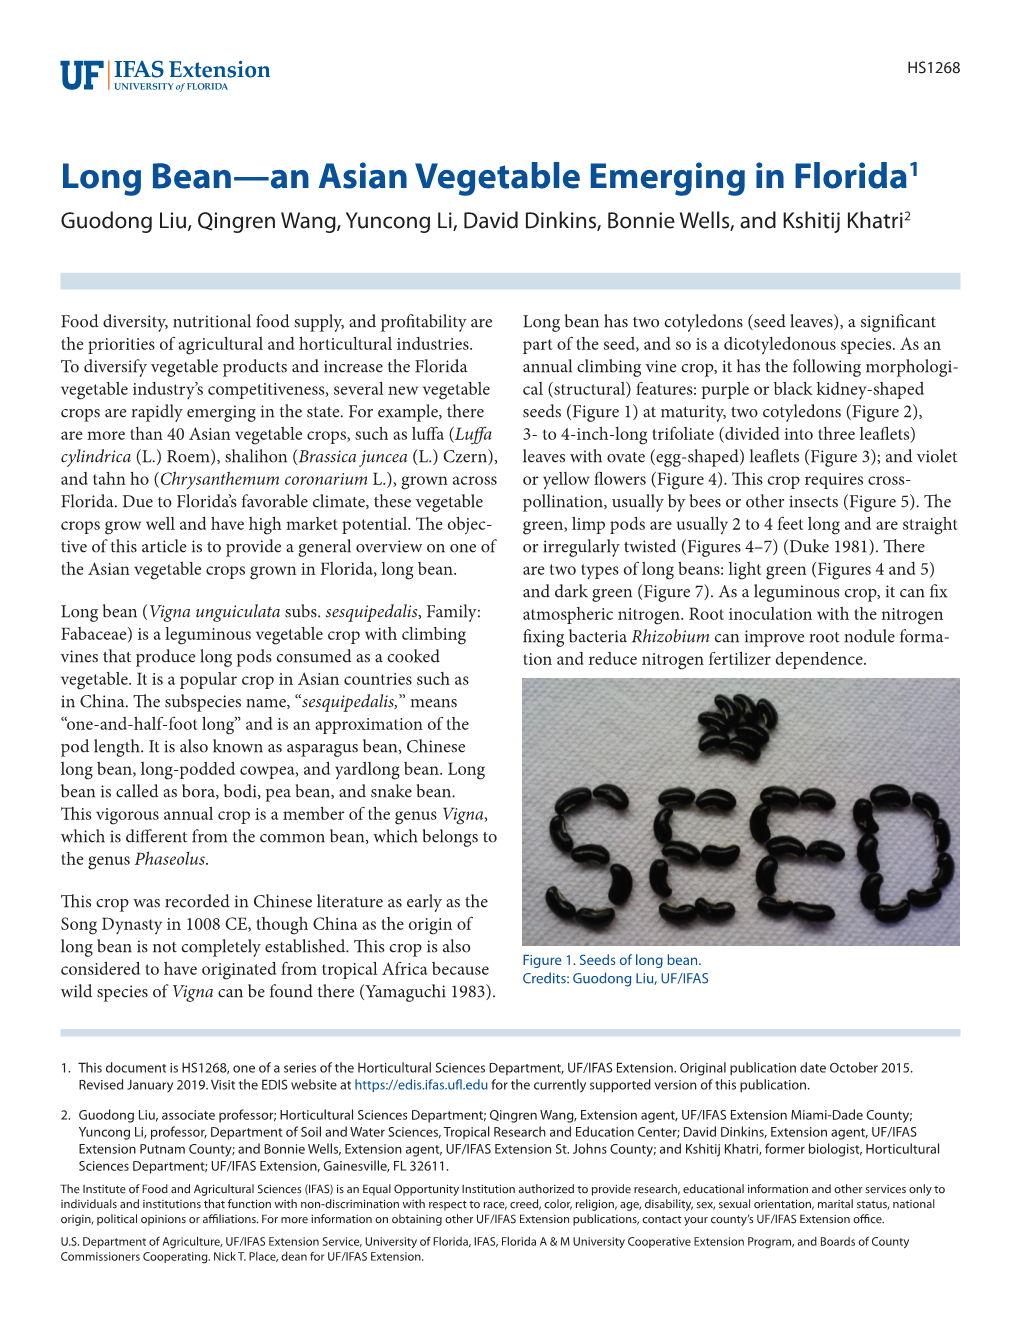 Long Bean—An Asian Vegetable Emerging in Florida1 Guodong Liu, Qingren Wang, Yuncong Li, David Dinkins, Bonnie Wells, and Kshitij Khatri2